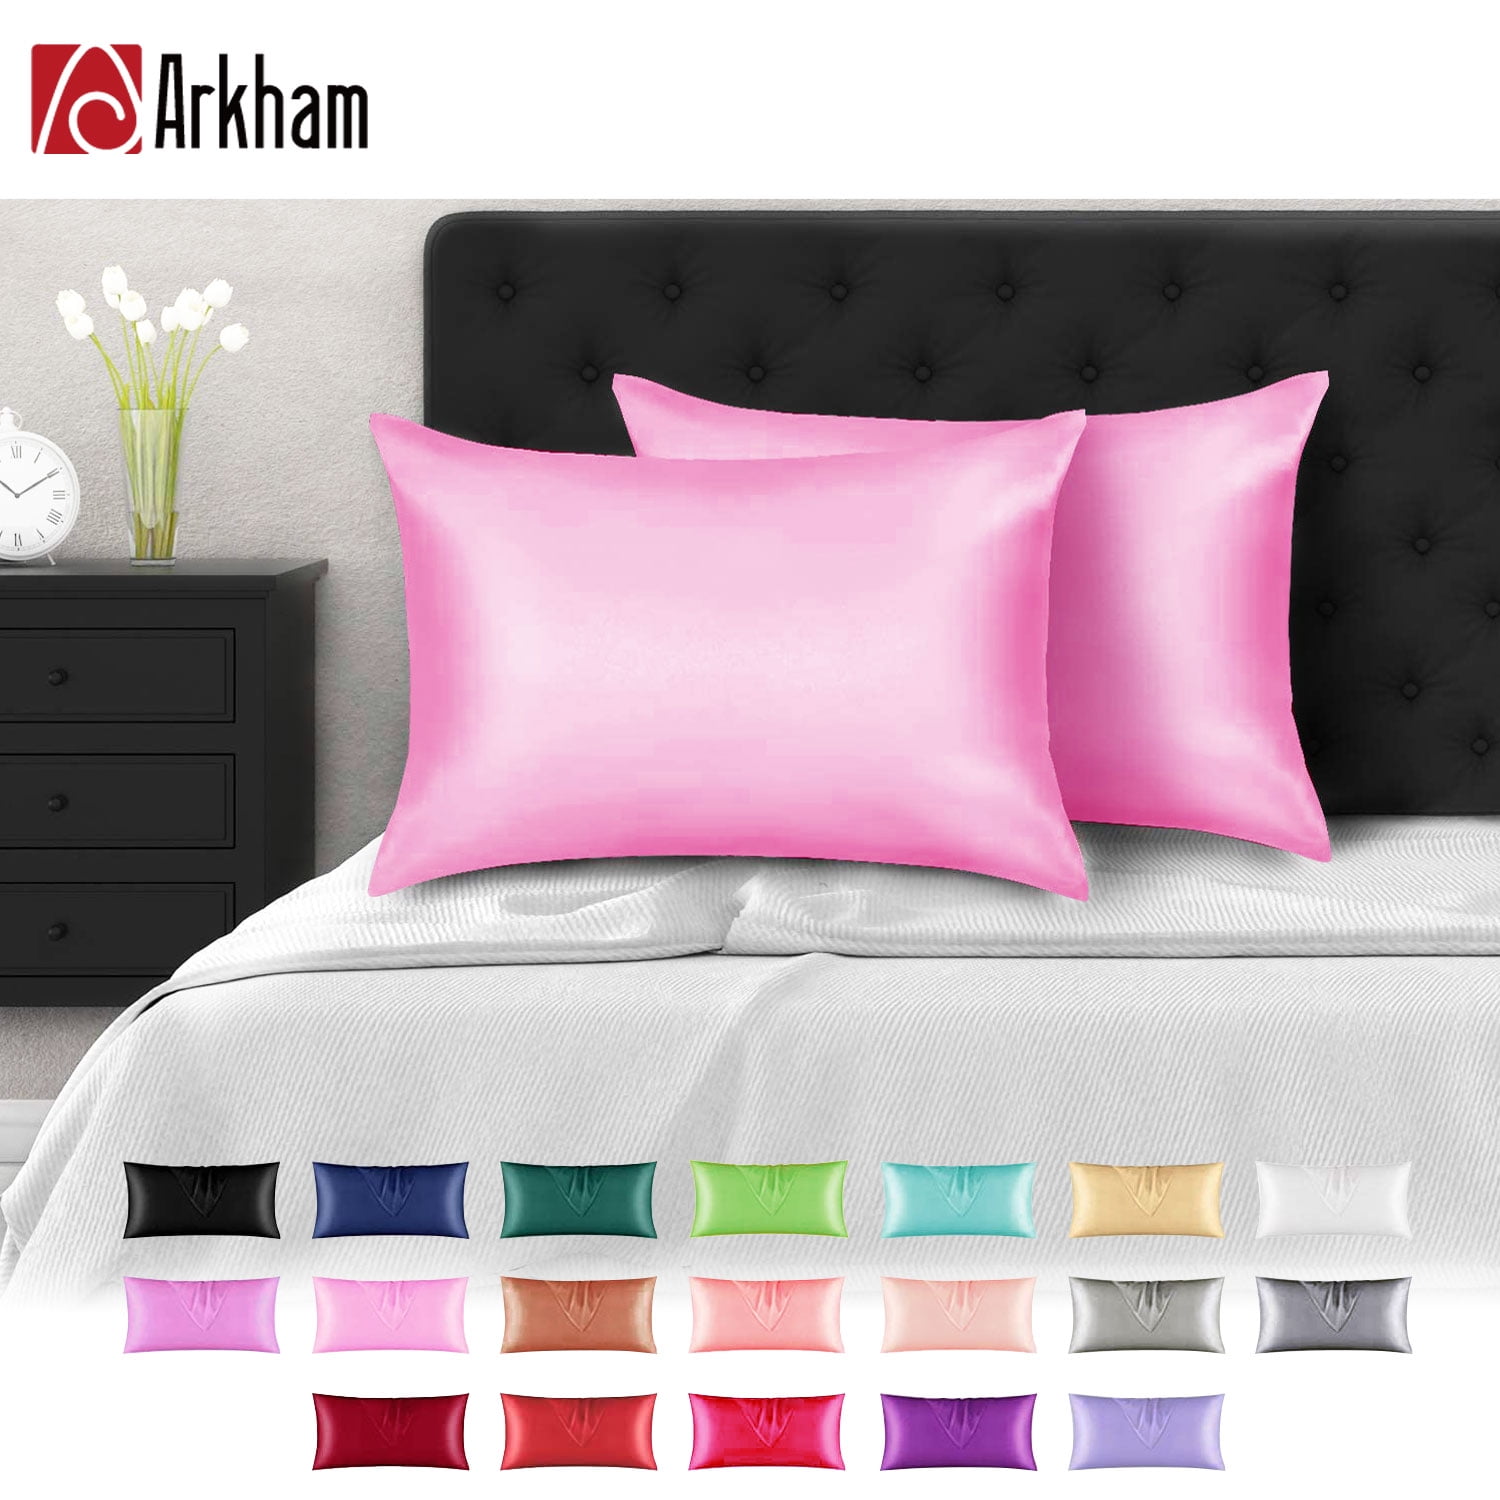 Details about   Standard Queen King Satin Silky Fiber Pillowcase Pillow Case Cover Home Bedding 